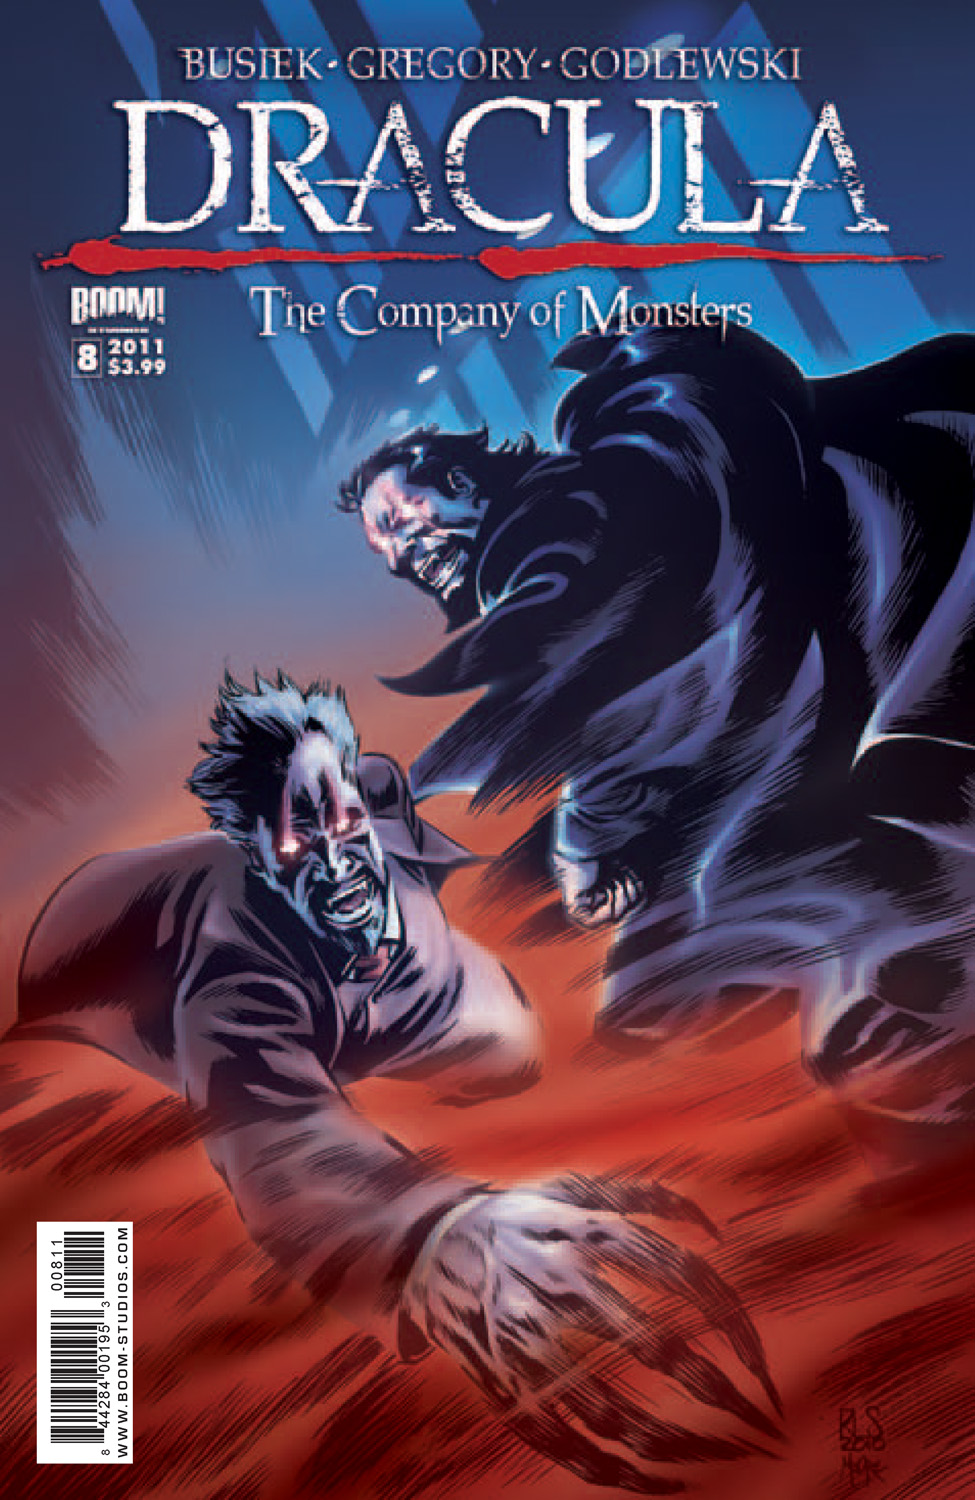 Kurt Busiek's Dracula: The Company of Monsters #8